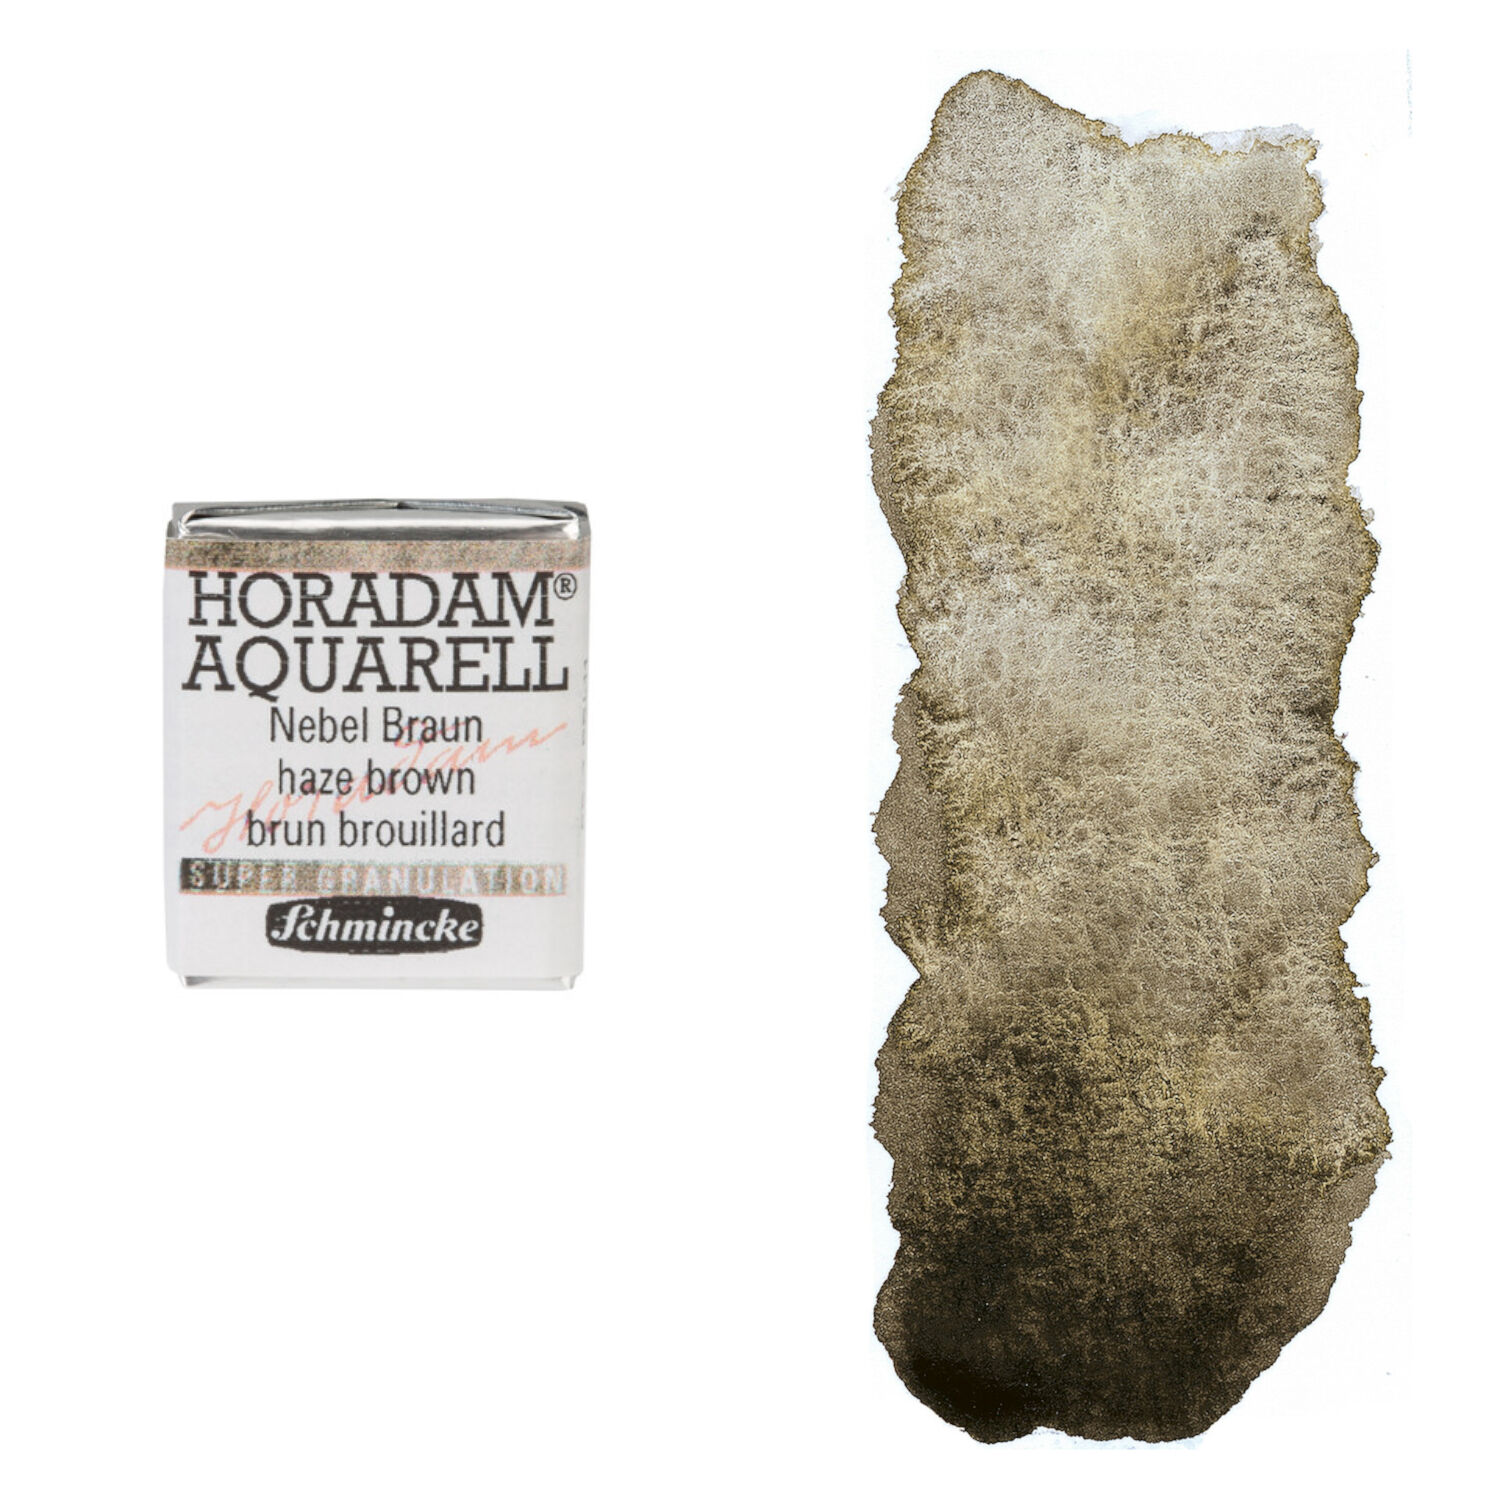 NEU Horadam Aquarell Super Granulation, 1/2 Npfchen, Nebel Braun